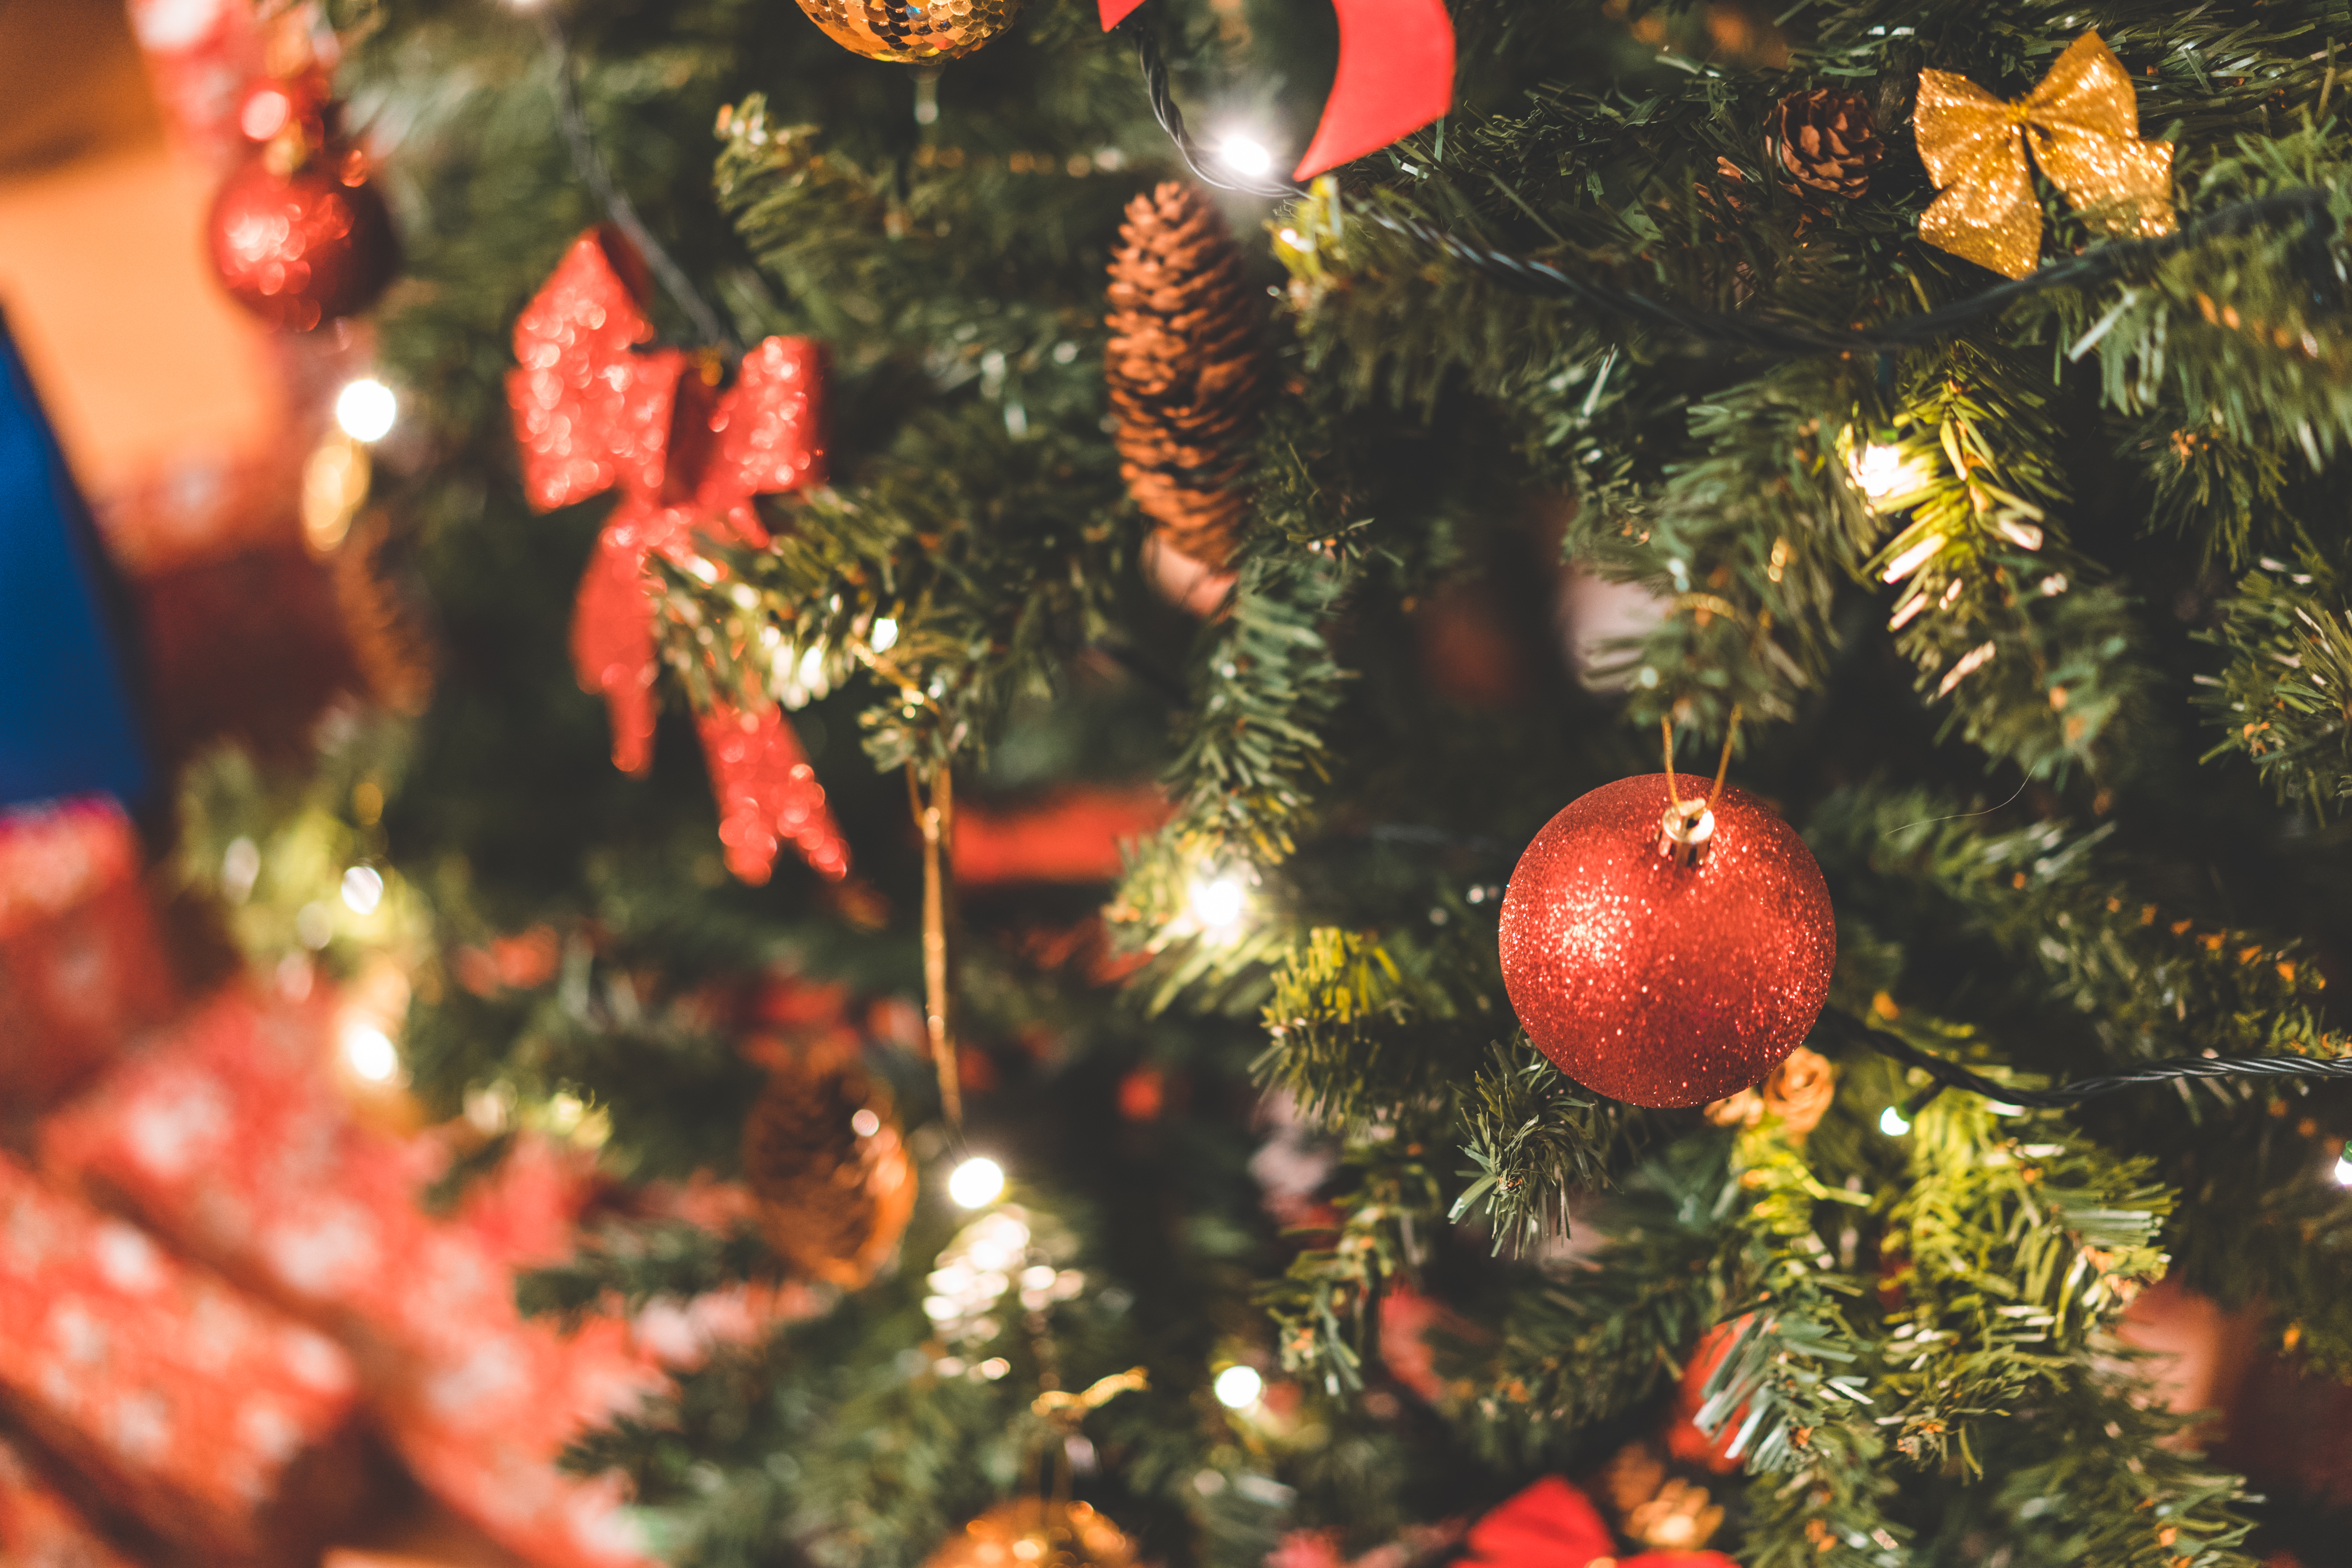 Christmas tree with lights and ornaments, Brunch with Santa at Casa Larga Vineyards